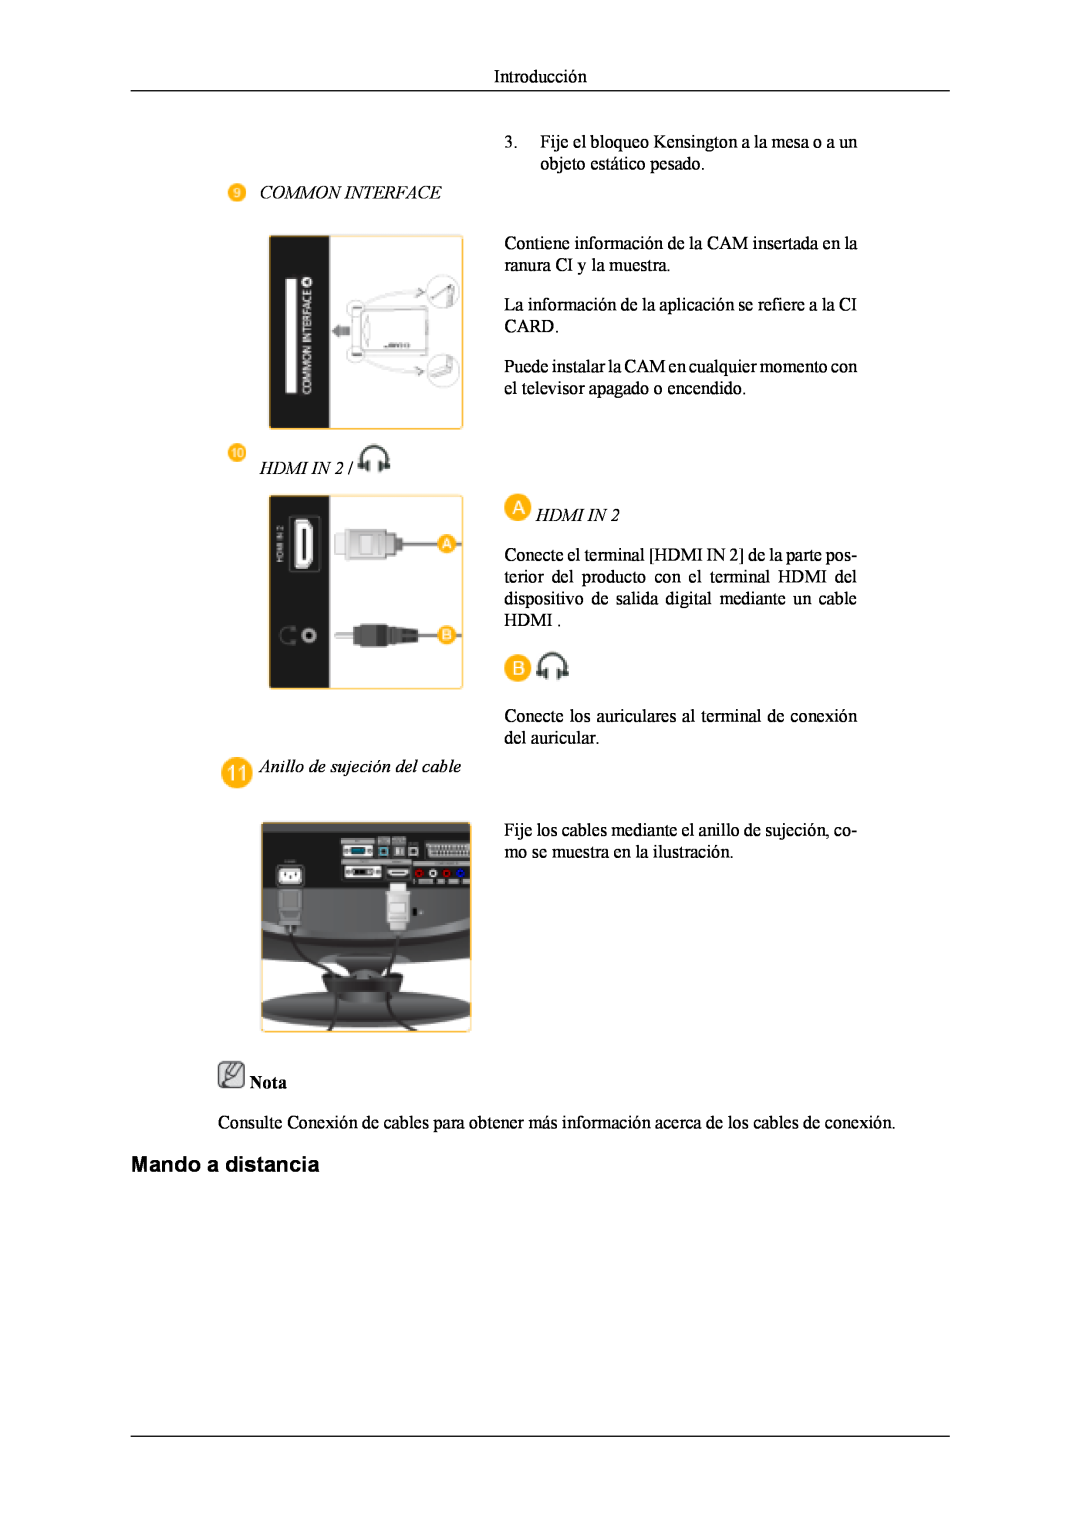 Samsung LS19CFEKF/EN manual Mando a distancia, Common Interface, Hdmi In Hdmi In, Anillo de sujeción del cable, Nota 